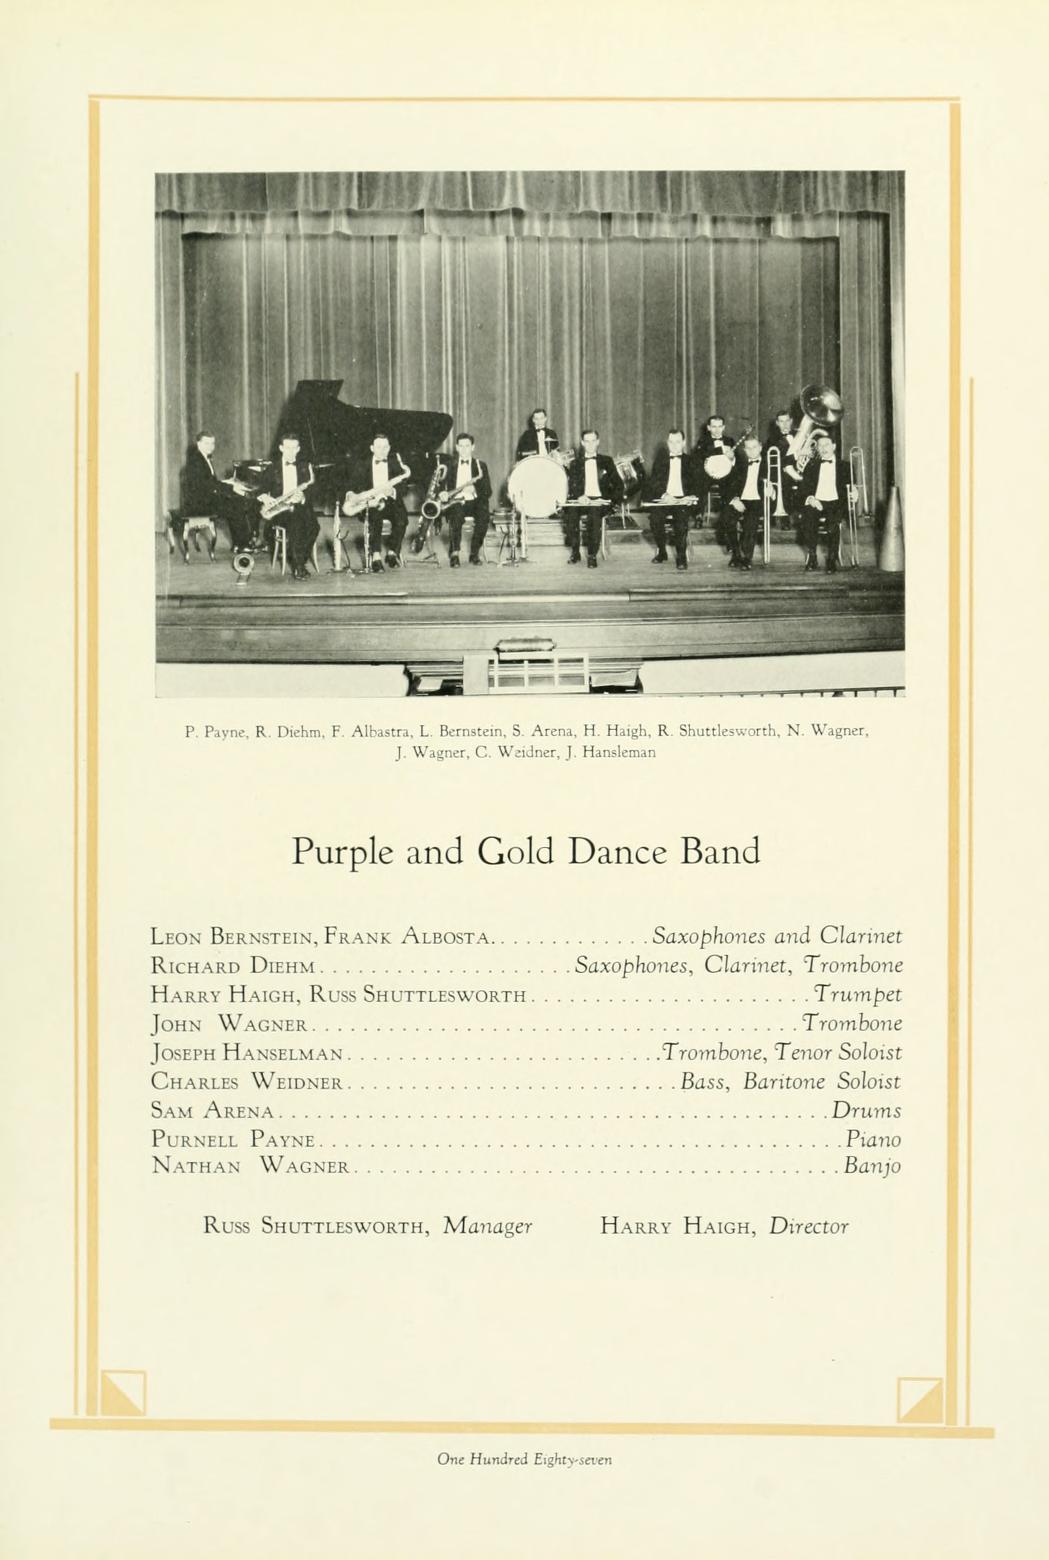   P. Payne, R. Dick, F. Albastra, L Bertem, S. Ara, H. Hagh, R. Shuttleworth, N. Wagner JWagner, C. Weidner, J. Haneman LEON BERNSTEIN, FRANK ALBOSTA... RICHARD DIEHM. HARRY HAIGH, RUSS SHUTTLESWORTH, JOHN WAGNER CHARLES WEIDNER. Purple and Gold Dance Band JOSEPH HANSELMAN. Saxophones and Clarinet Saxophones, Clarinet, Trombone Trumpet Trombone Trombone, Tenor Soloist Bass, Baritone Soloist SAM ARENA Drums PURNELL PAYNE Piano NATHAN WAGNER. Banjo Russ SHUTTLESWORTH, Manager HARRY HAIGH, Director One Hundred Eightyinm